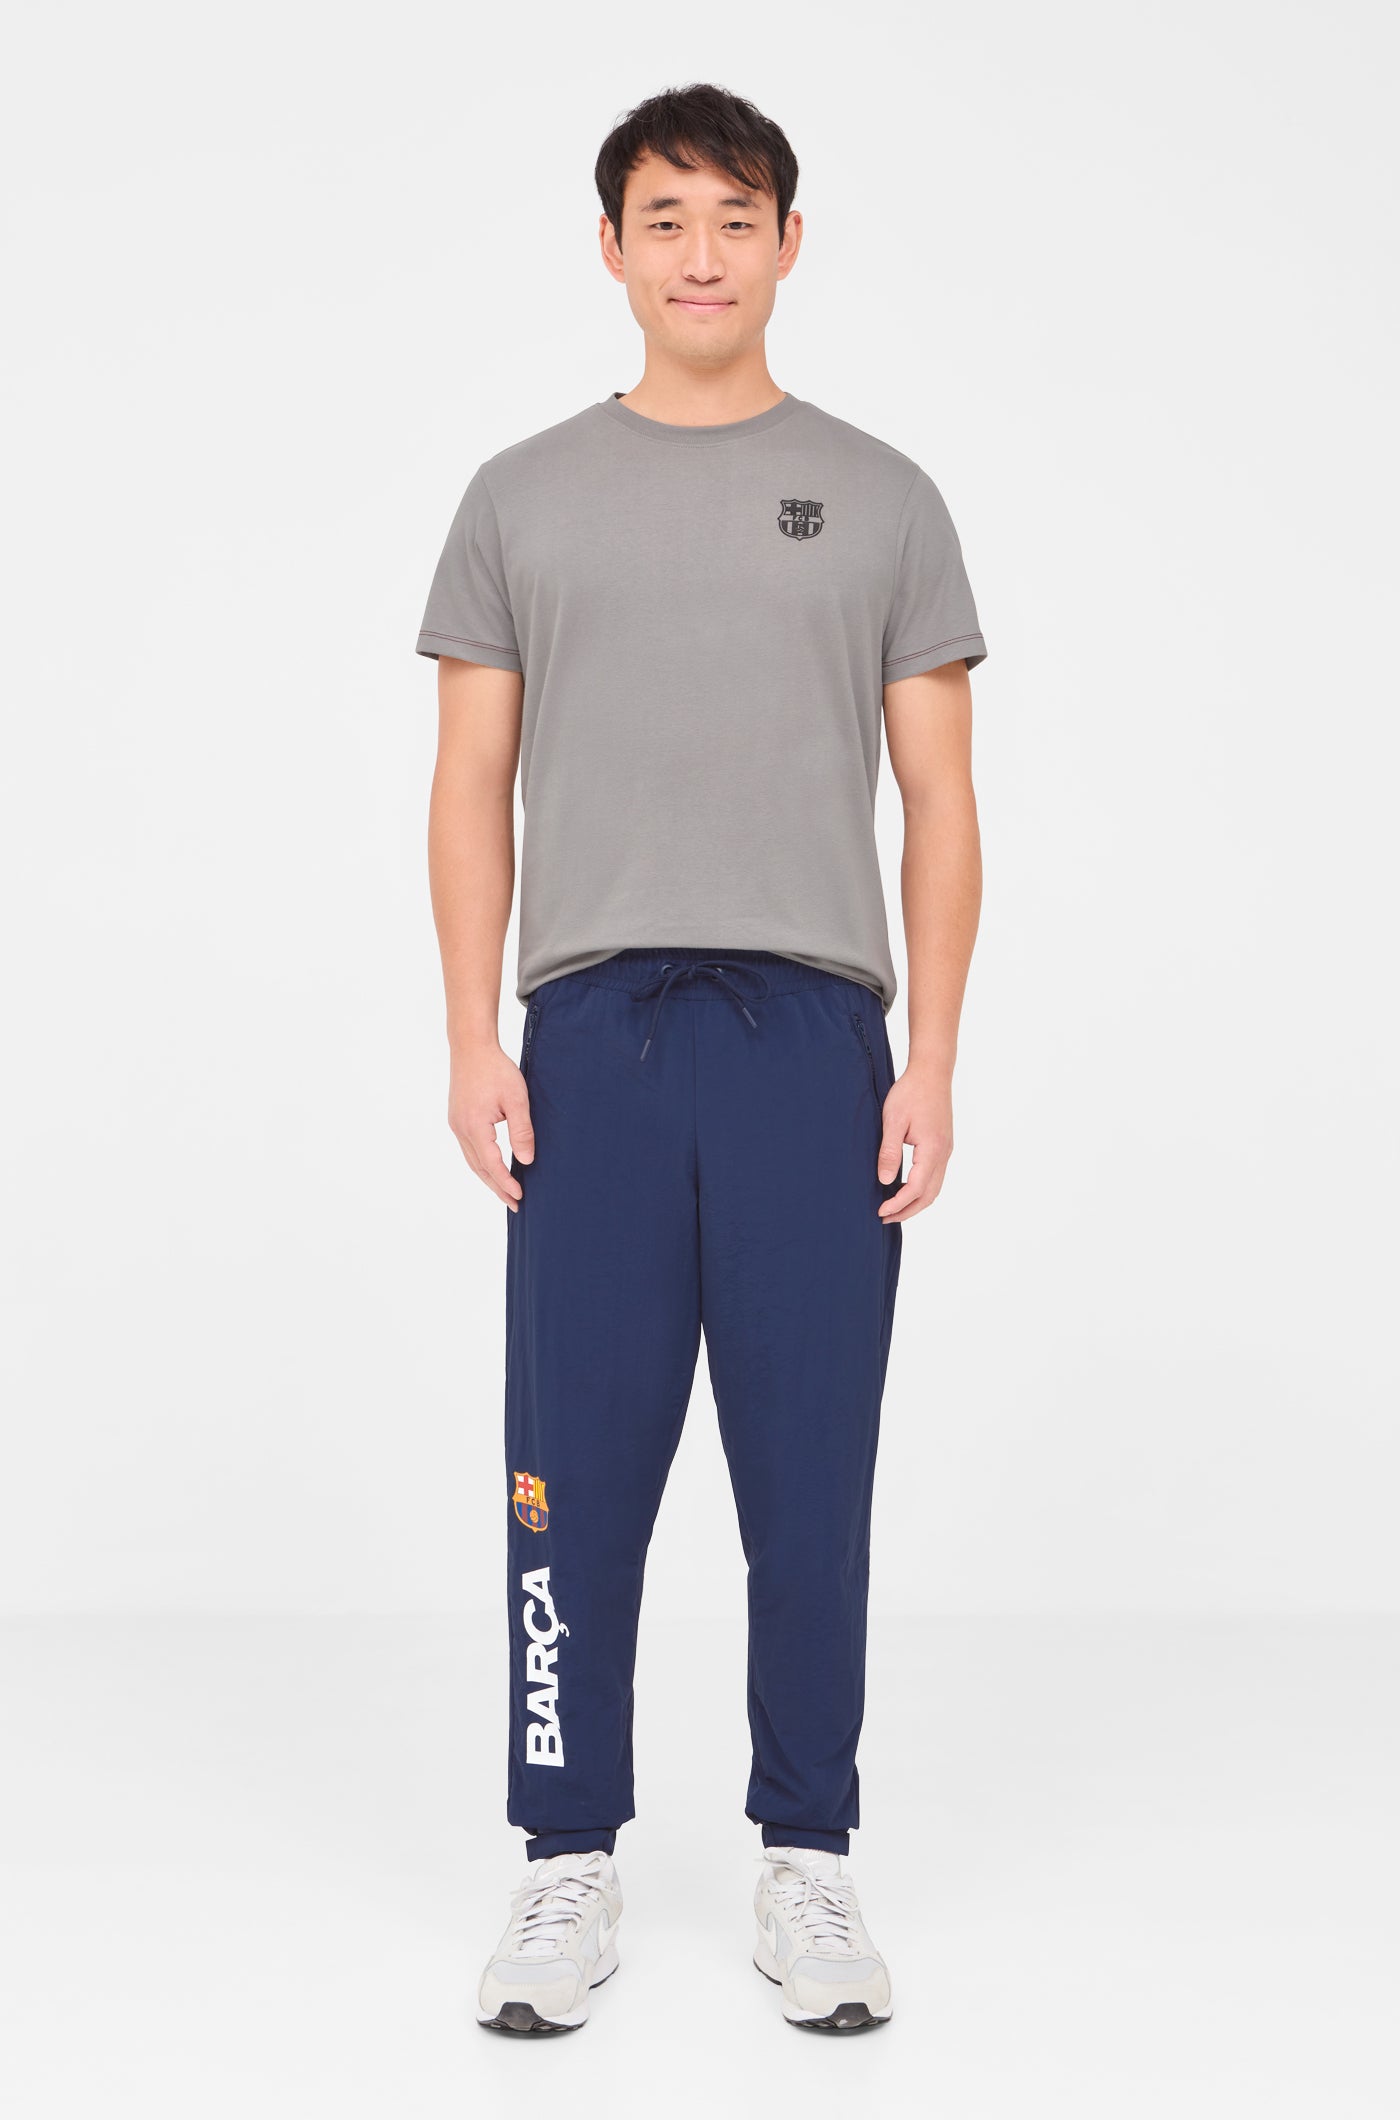 Pantalons esportius vintage del Barça.